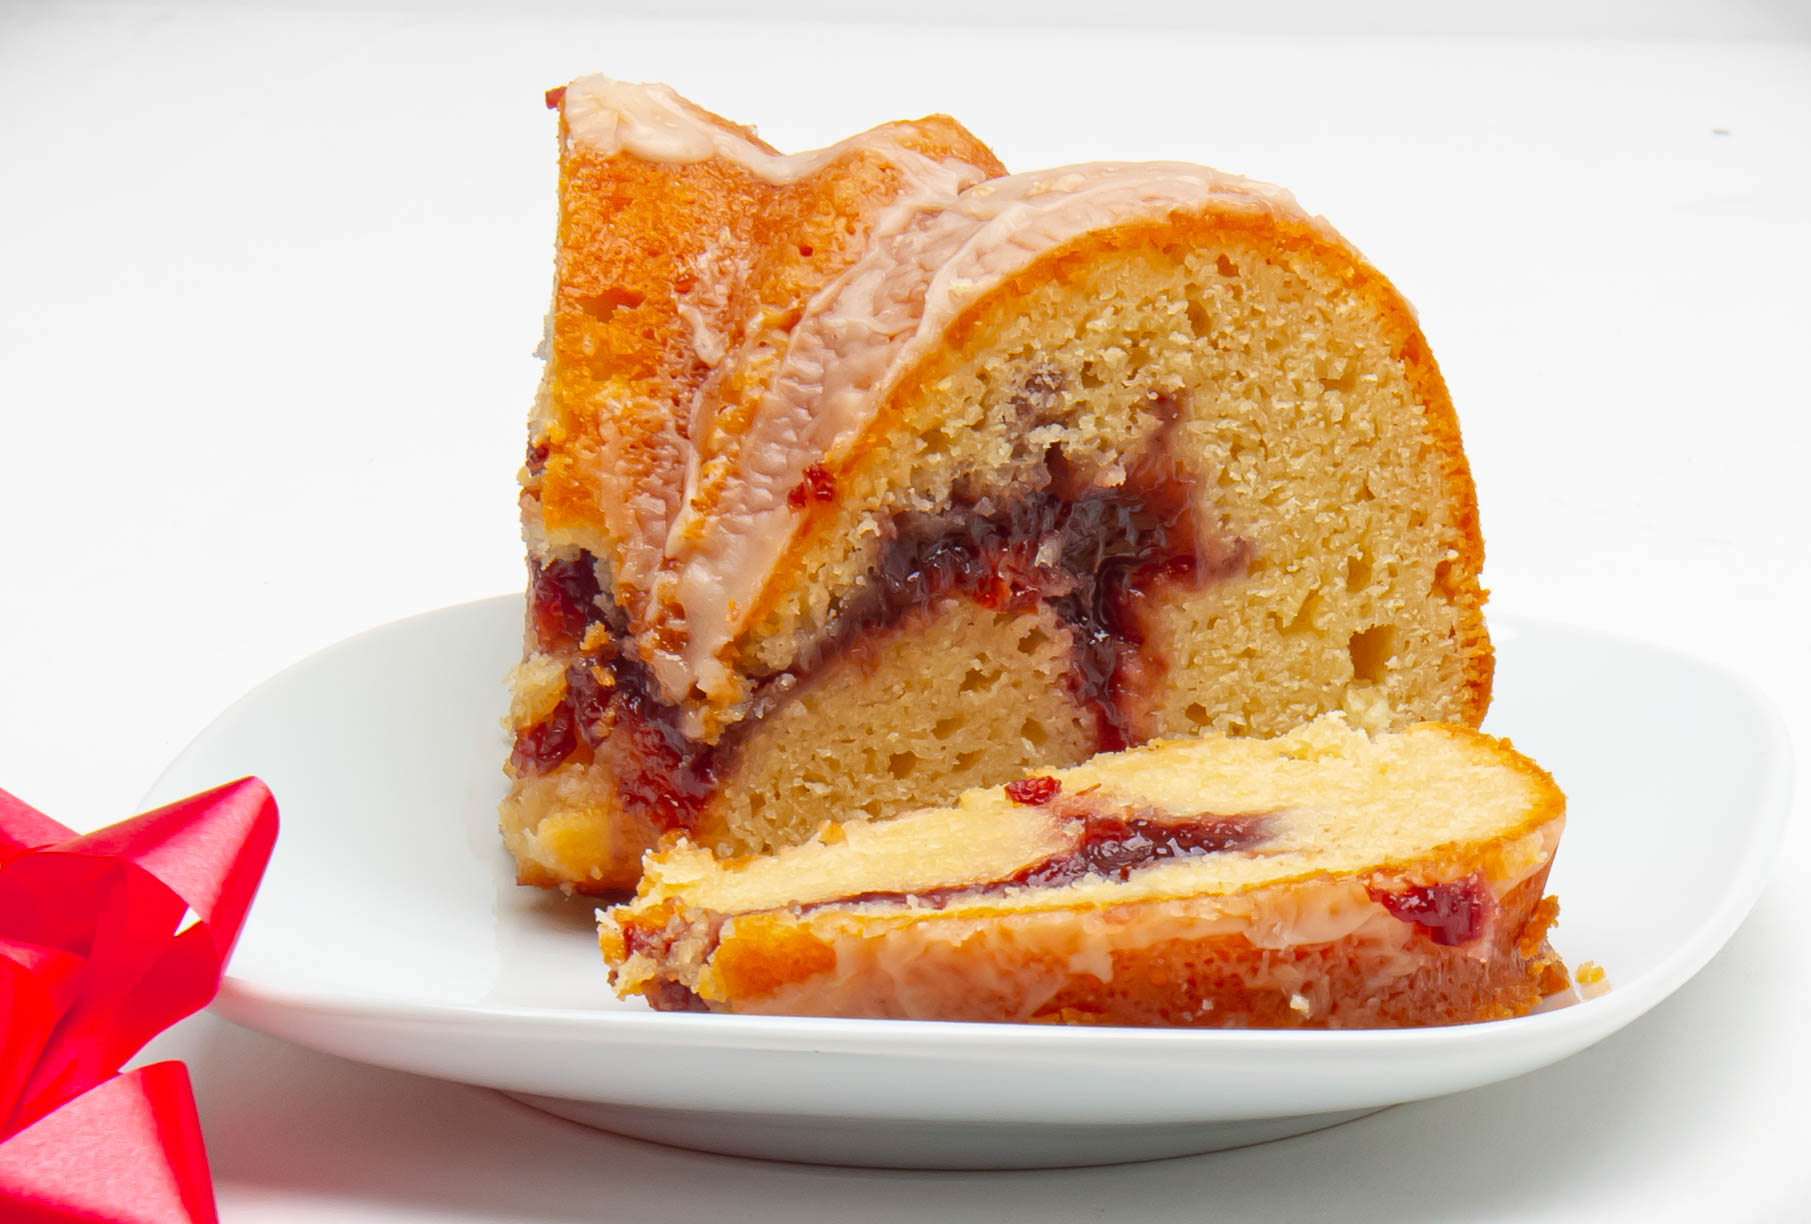 Raspberry Swirl Bundt Cake - Nordic Ware